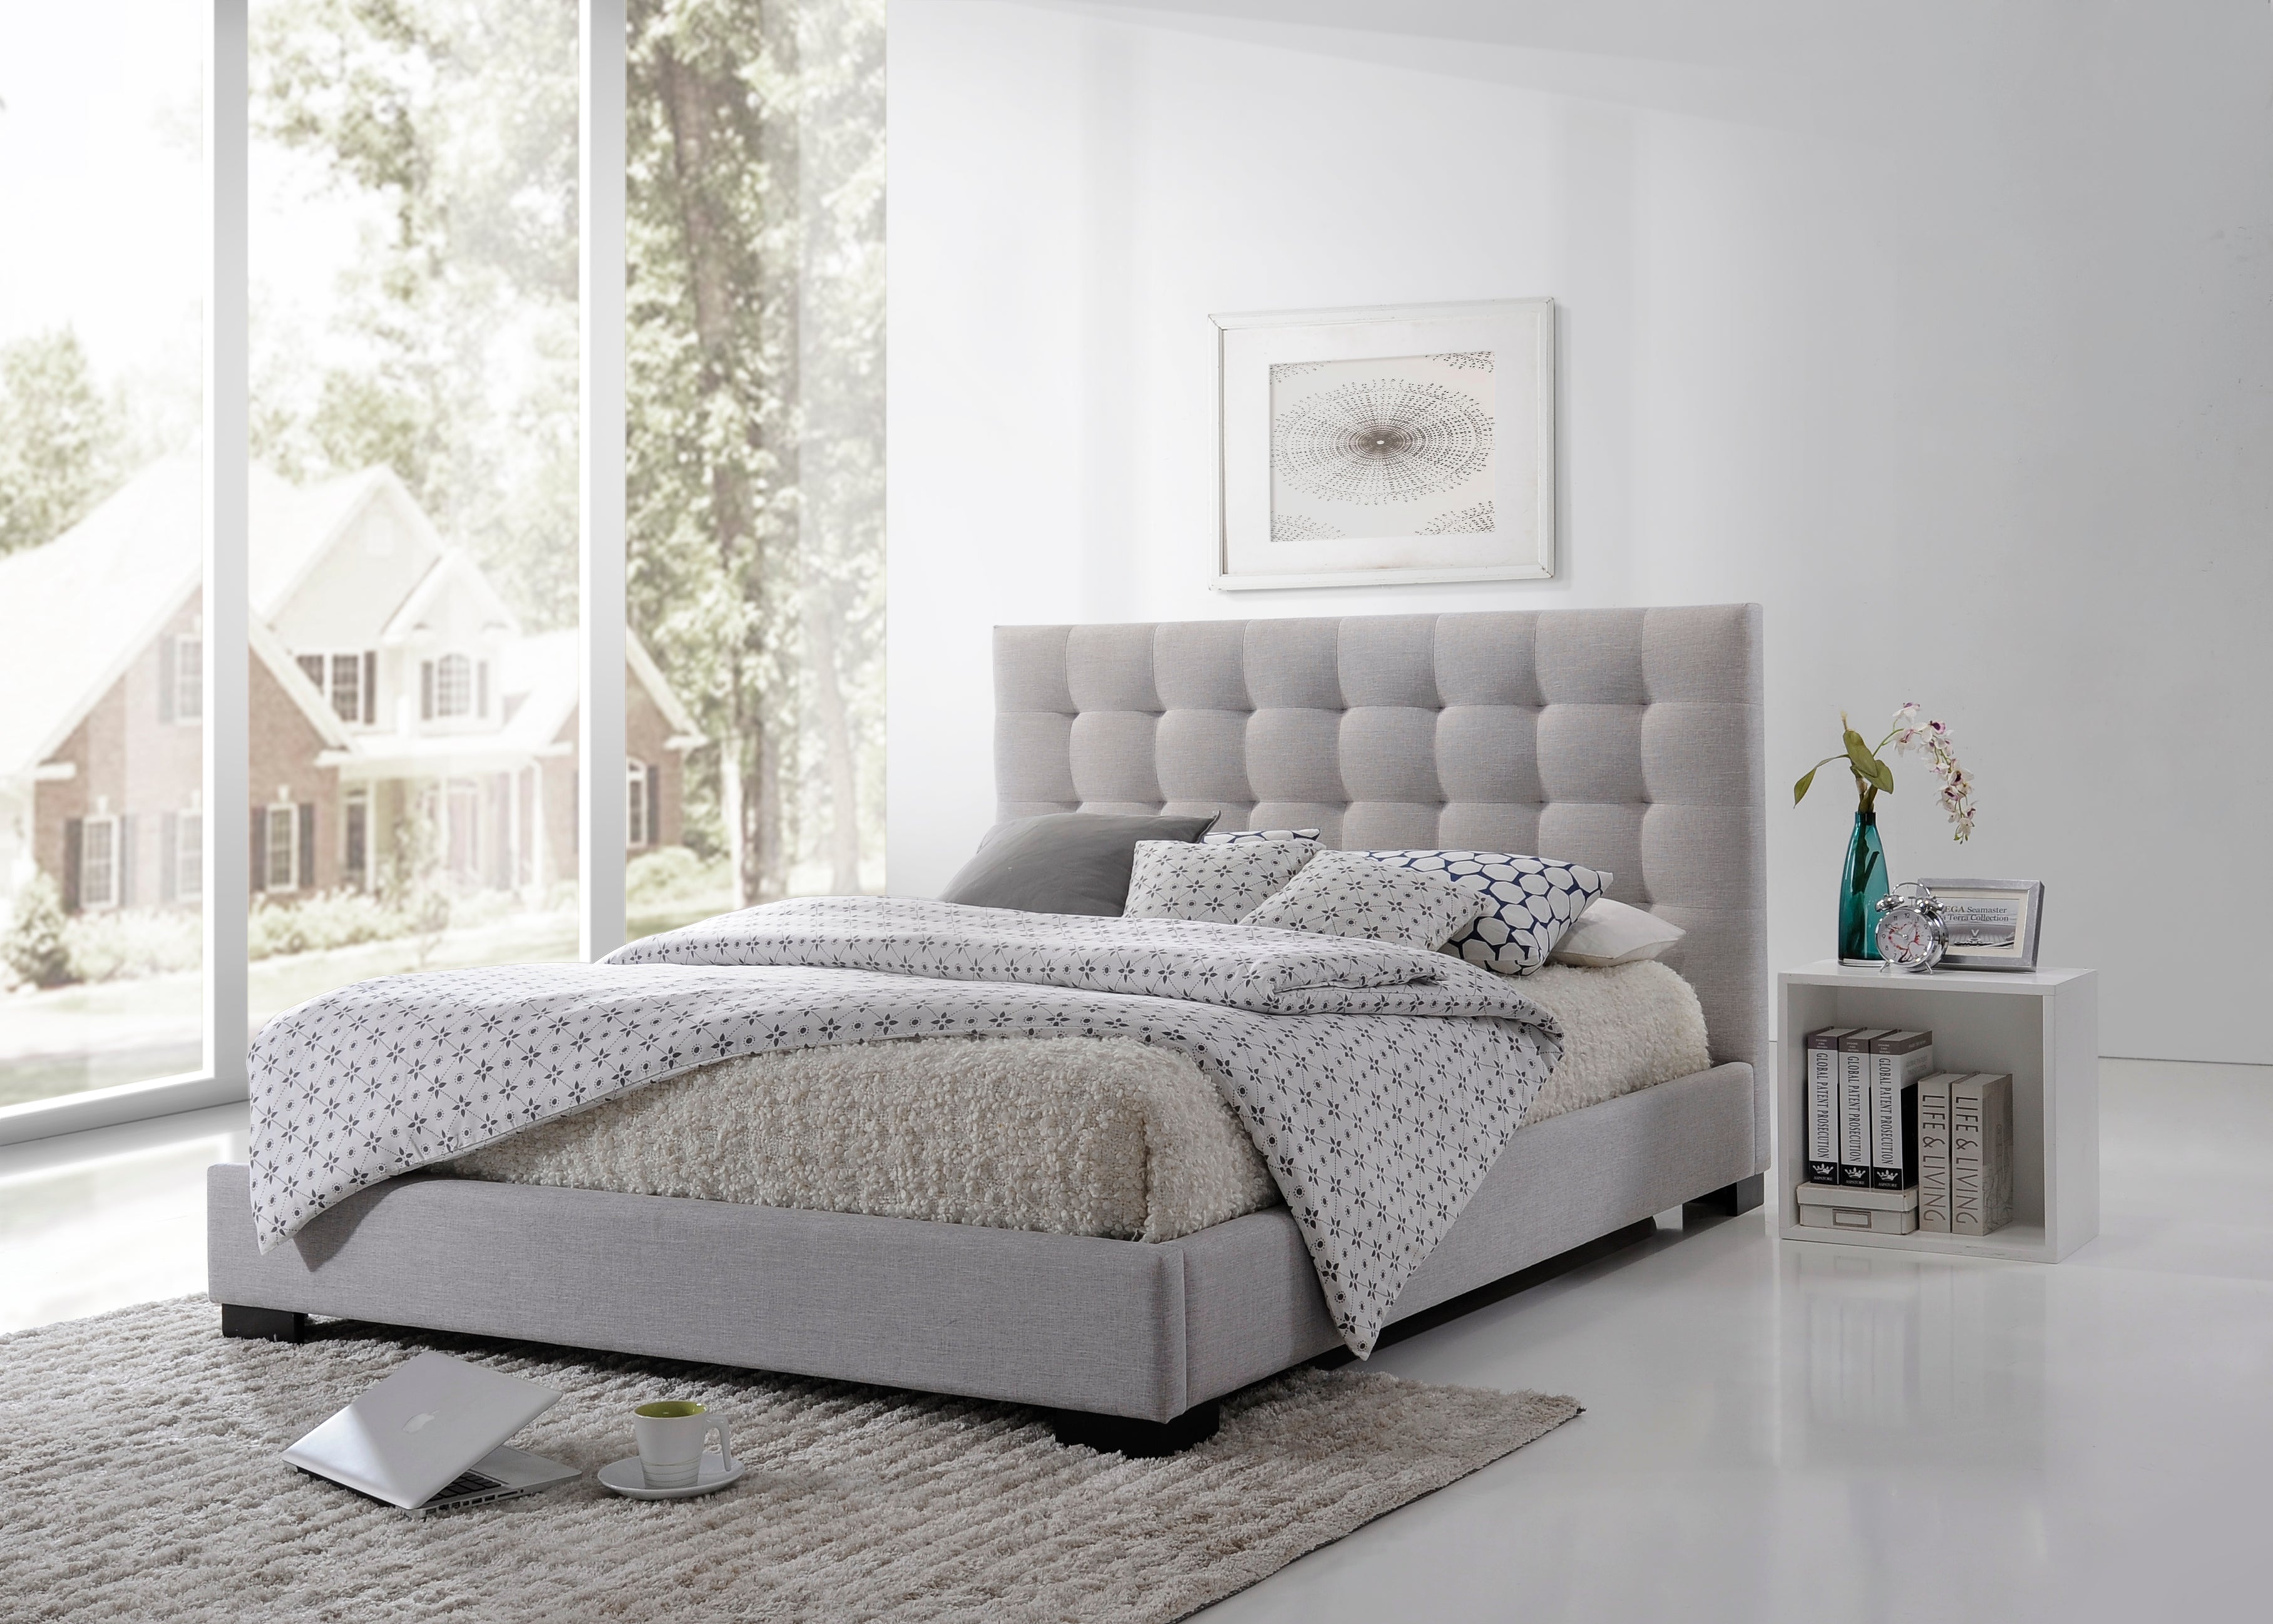 MEMPHIS BED FRAME – Suave Furniture